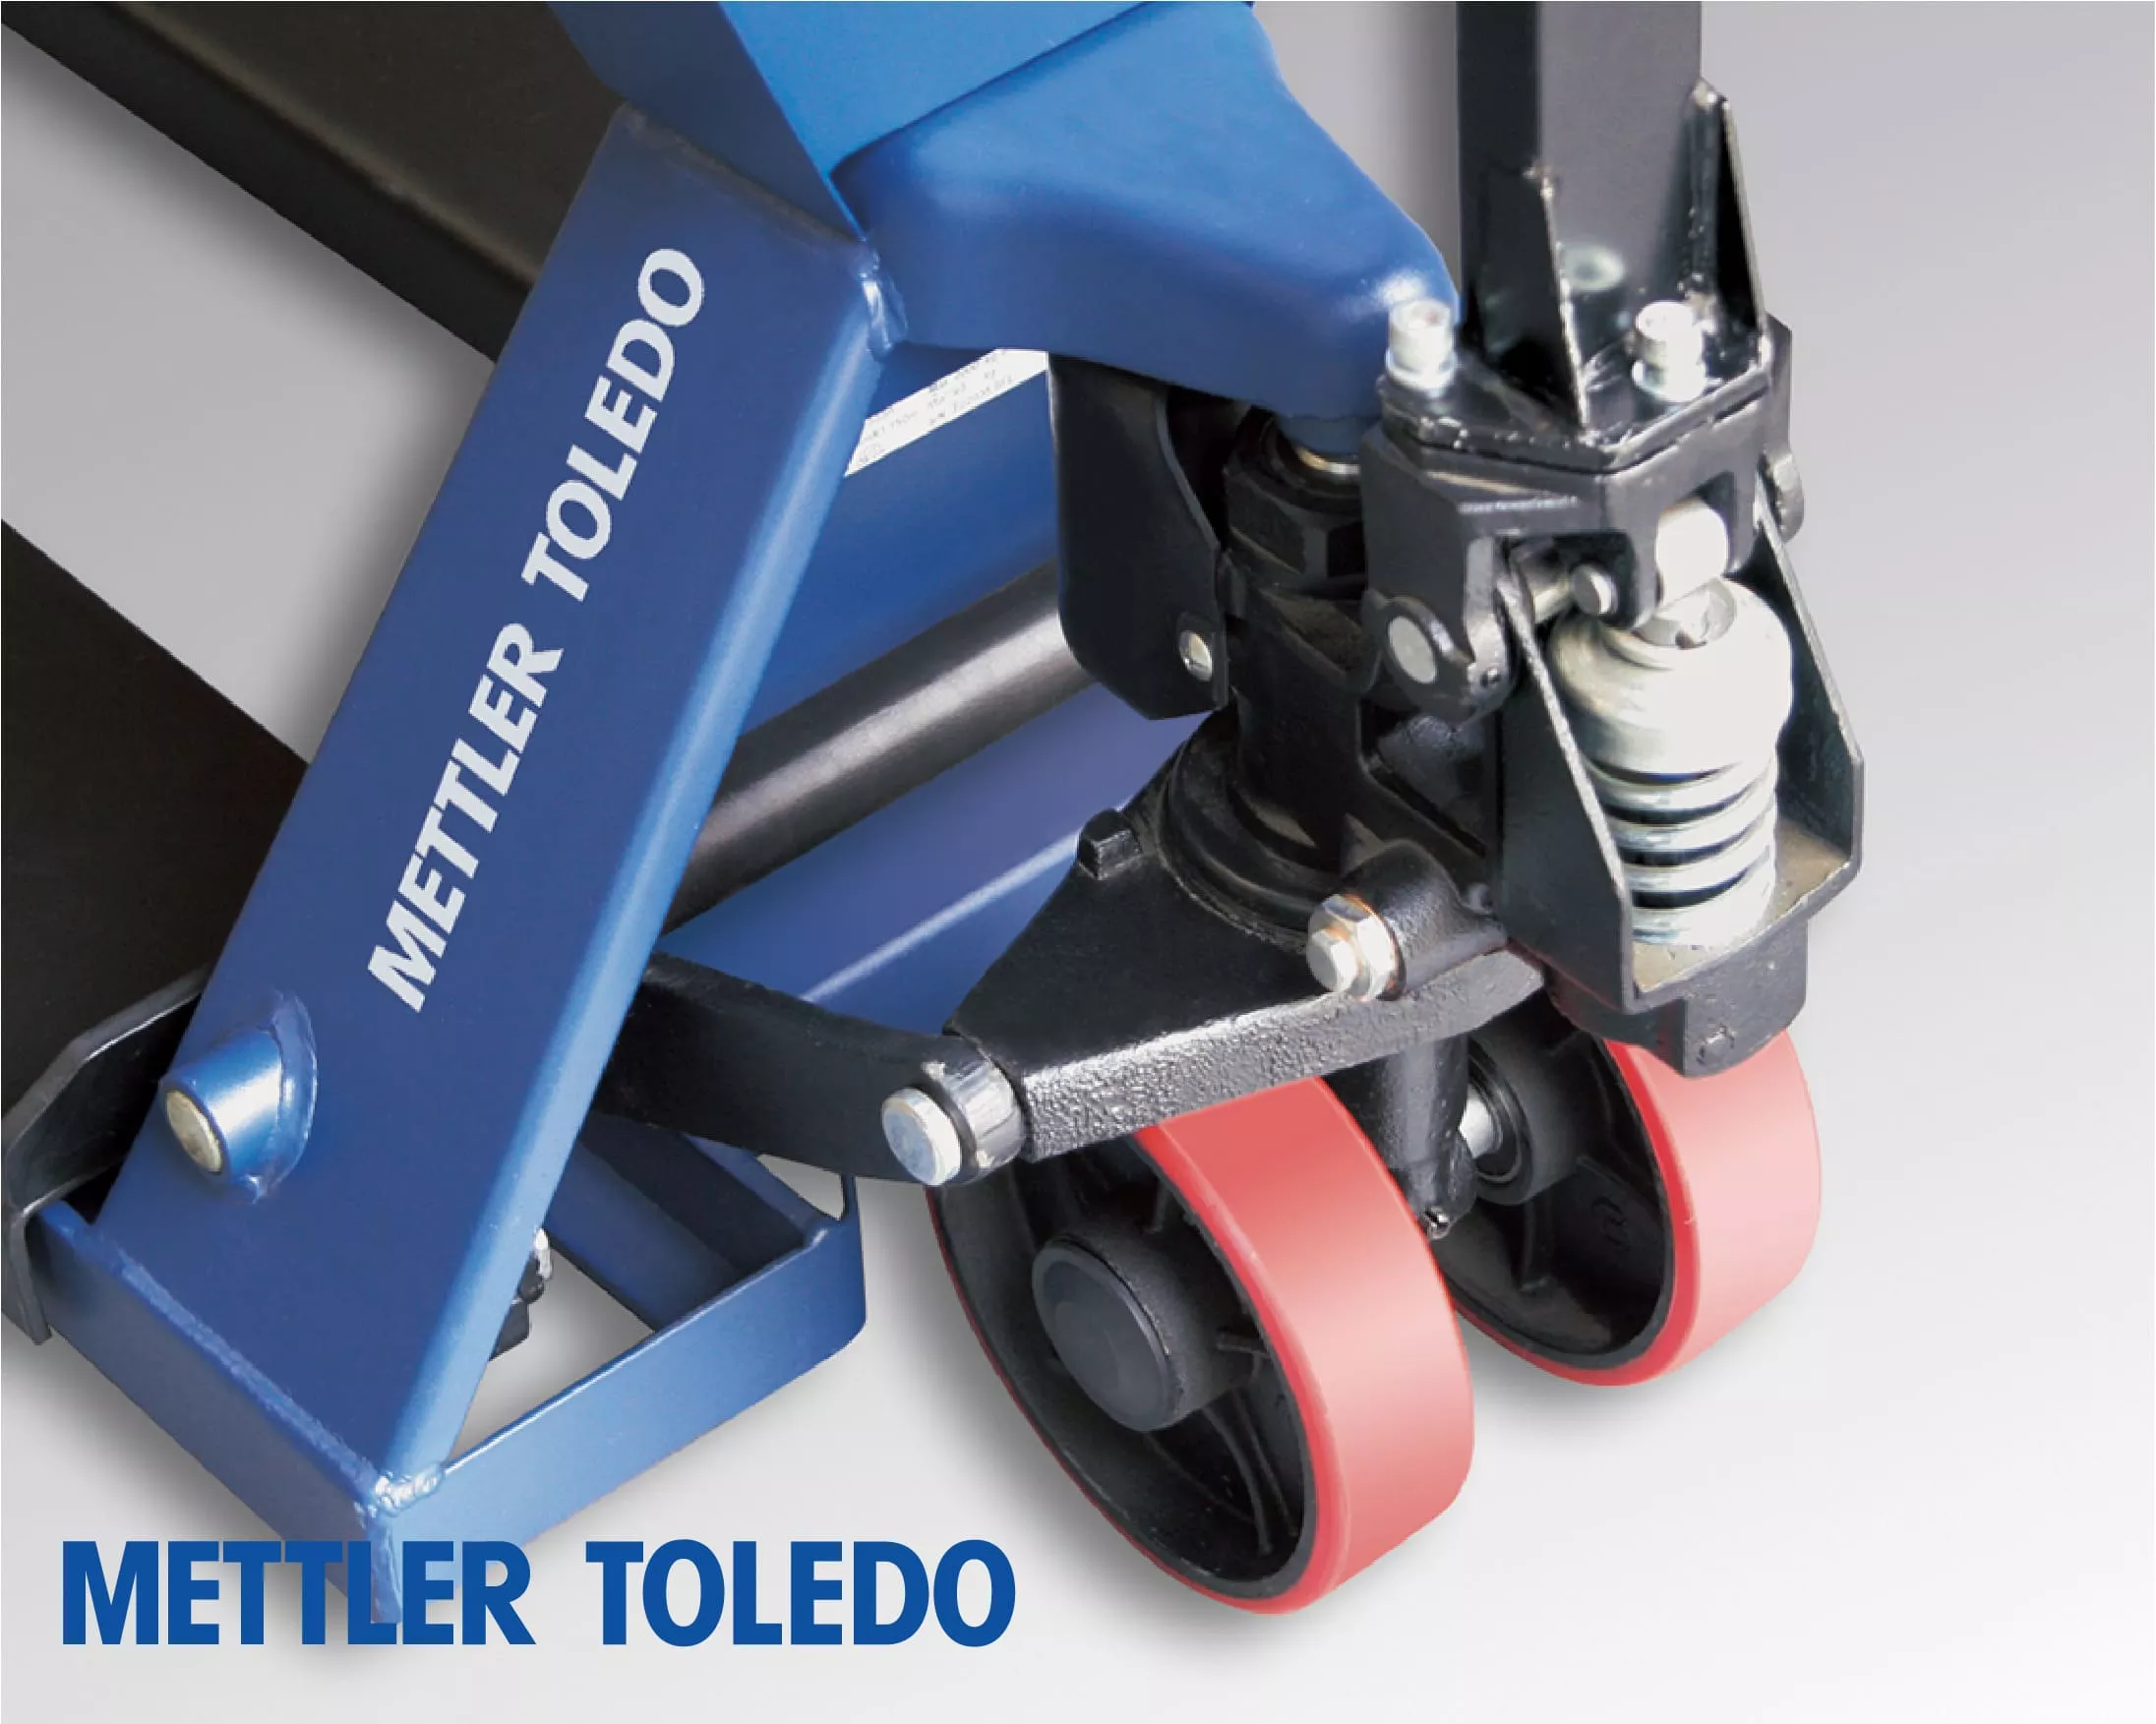 Mettler Toledo Pallet, Pallet Truck and Mobile Scales